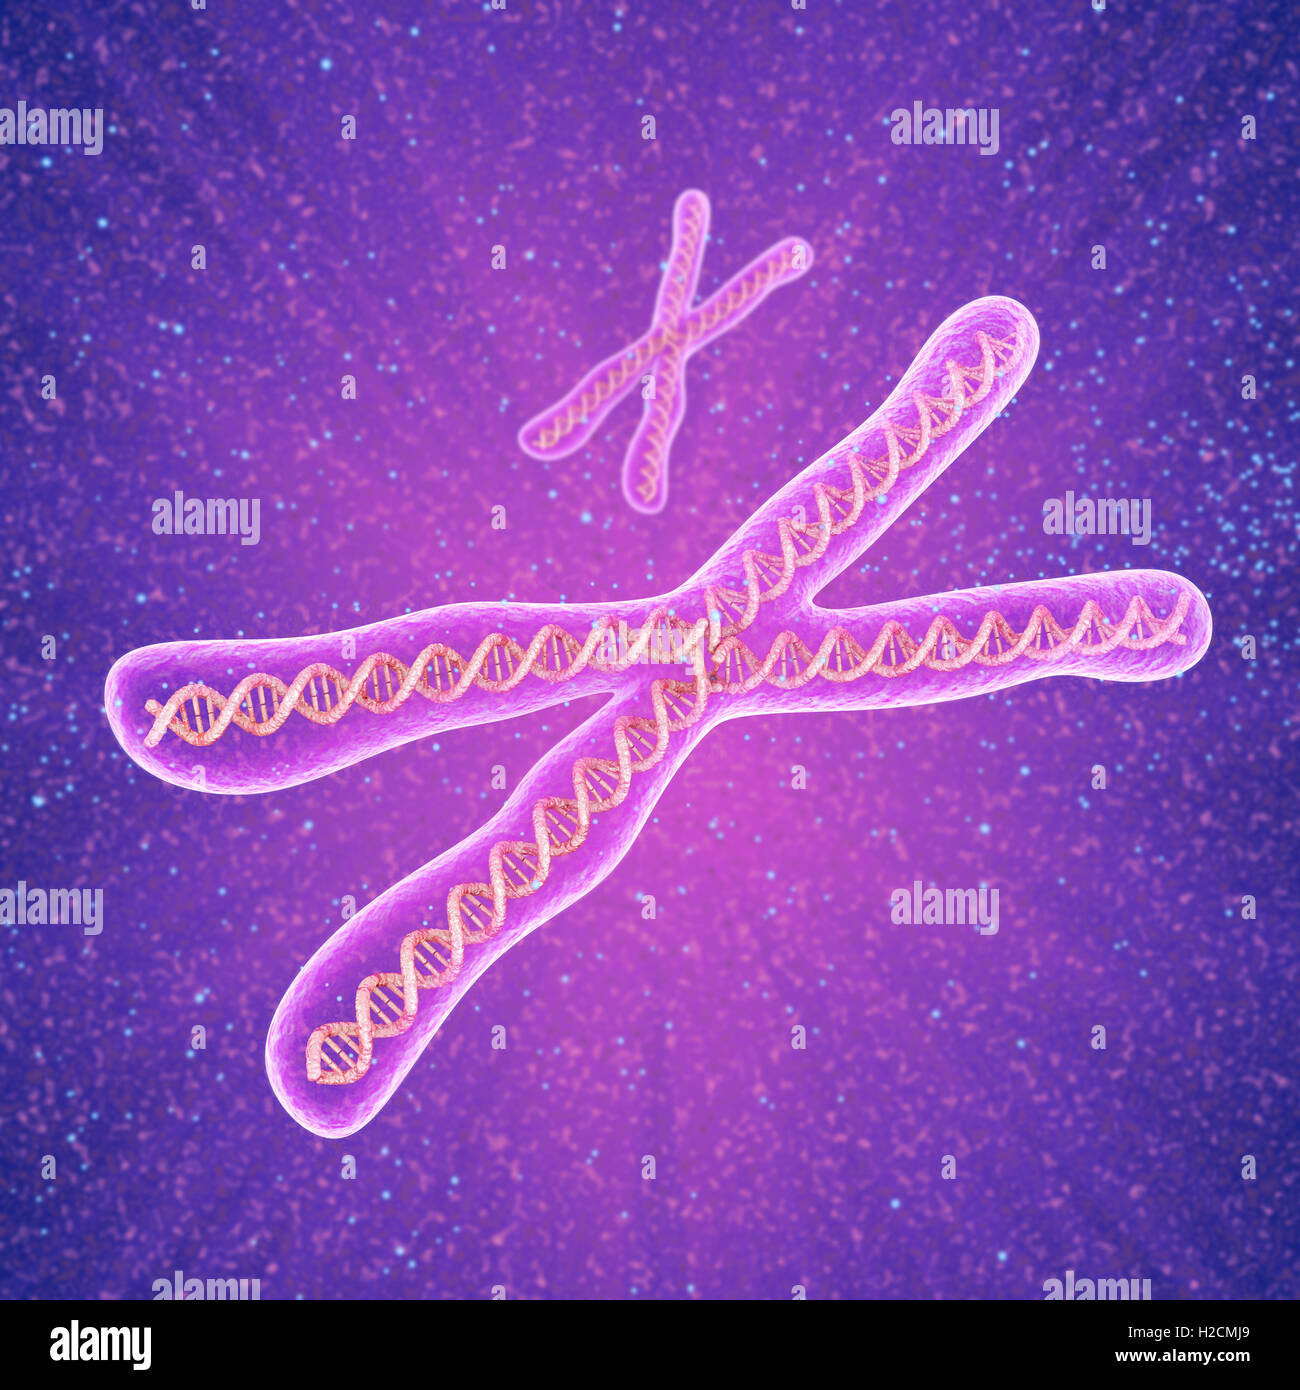 Chromosome molecule concept, Medical accurate 3D illustration Stock Photo